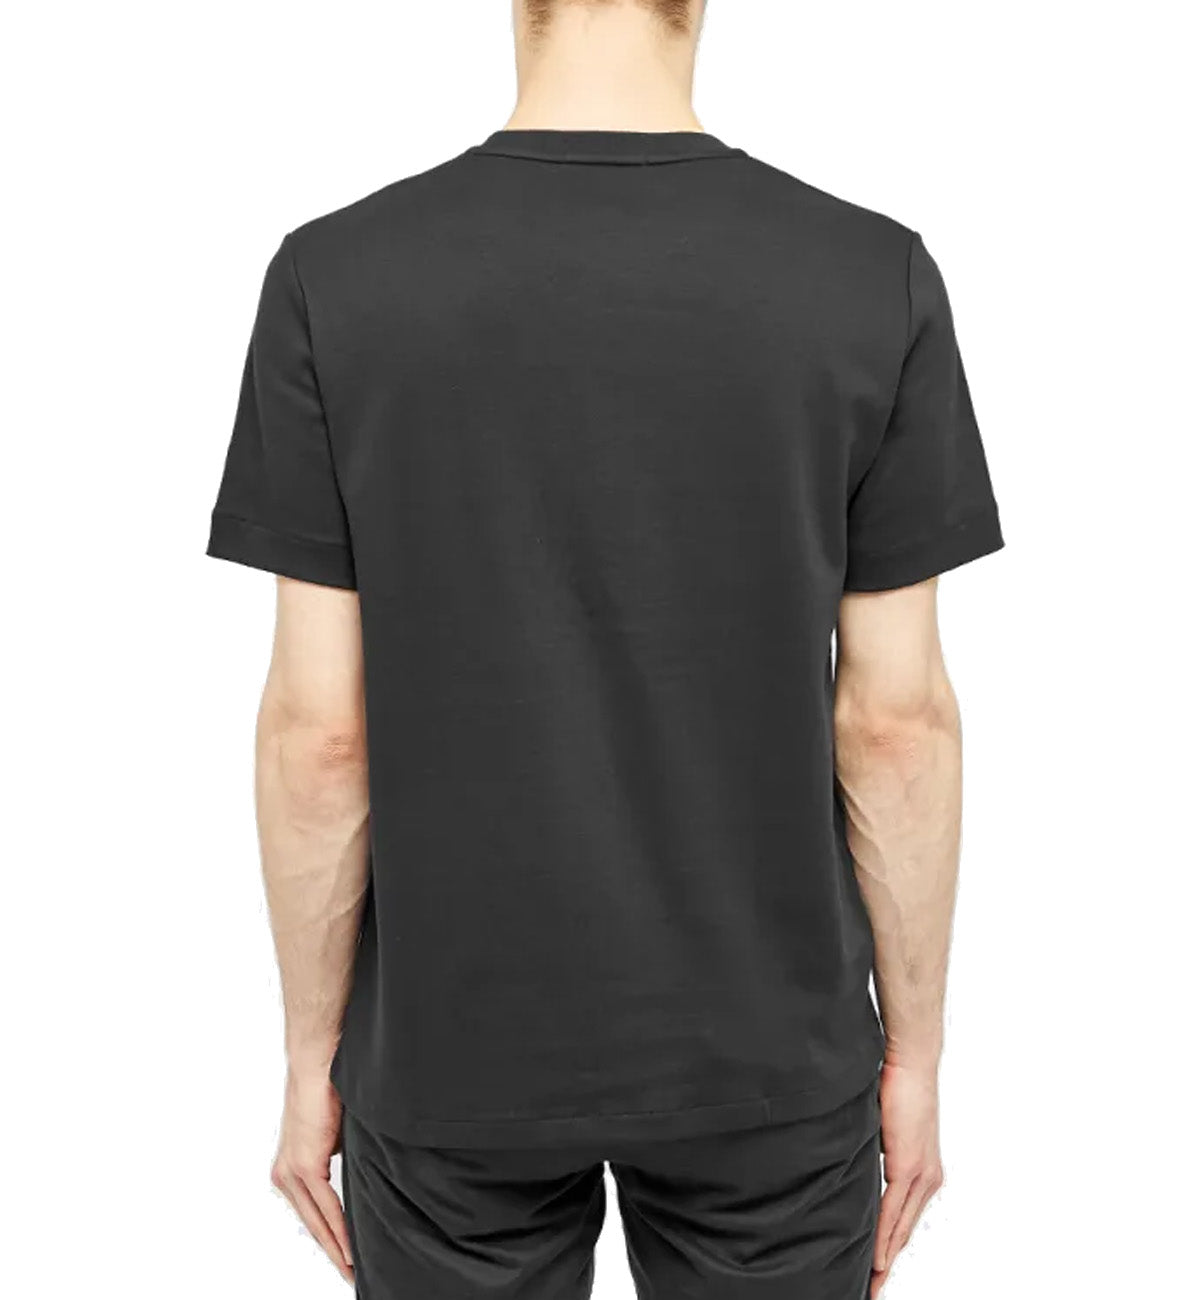 Fred Perry Acid Bright Logo T-Shirt (Black)